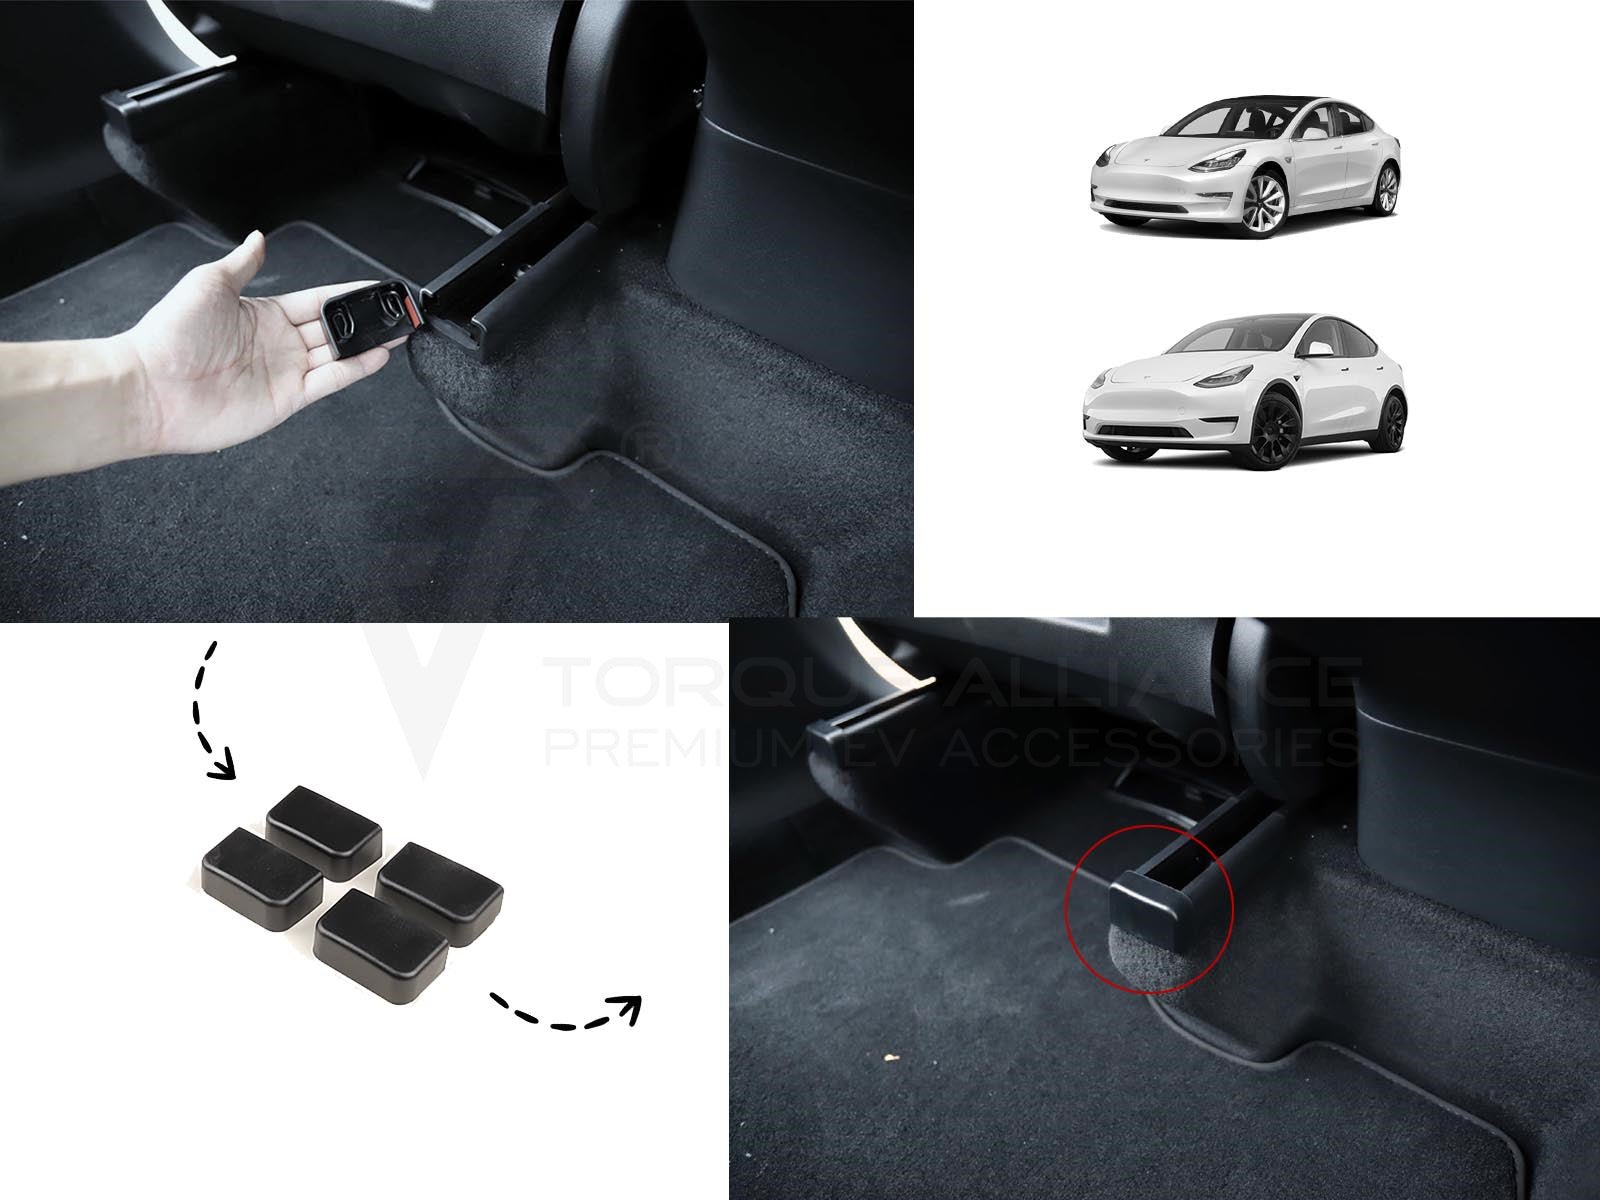 Tesla Model 3 and Model Y: Seat Slide Rails Soft Rubber Cover Plugs (4 pcs)